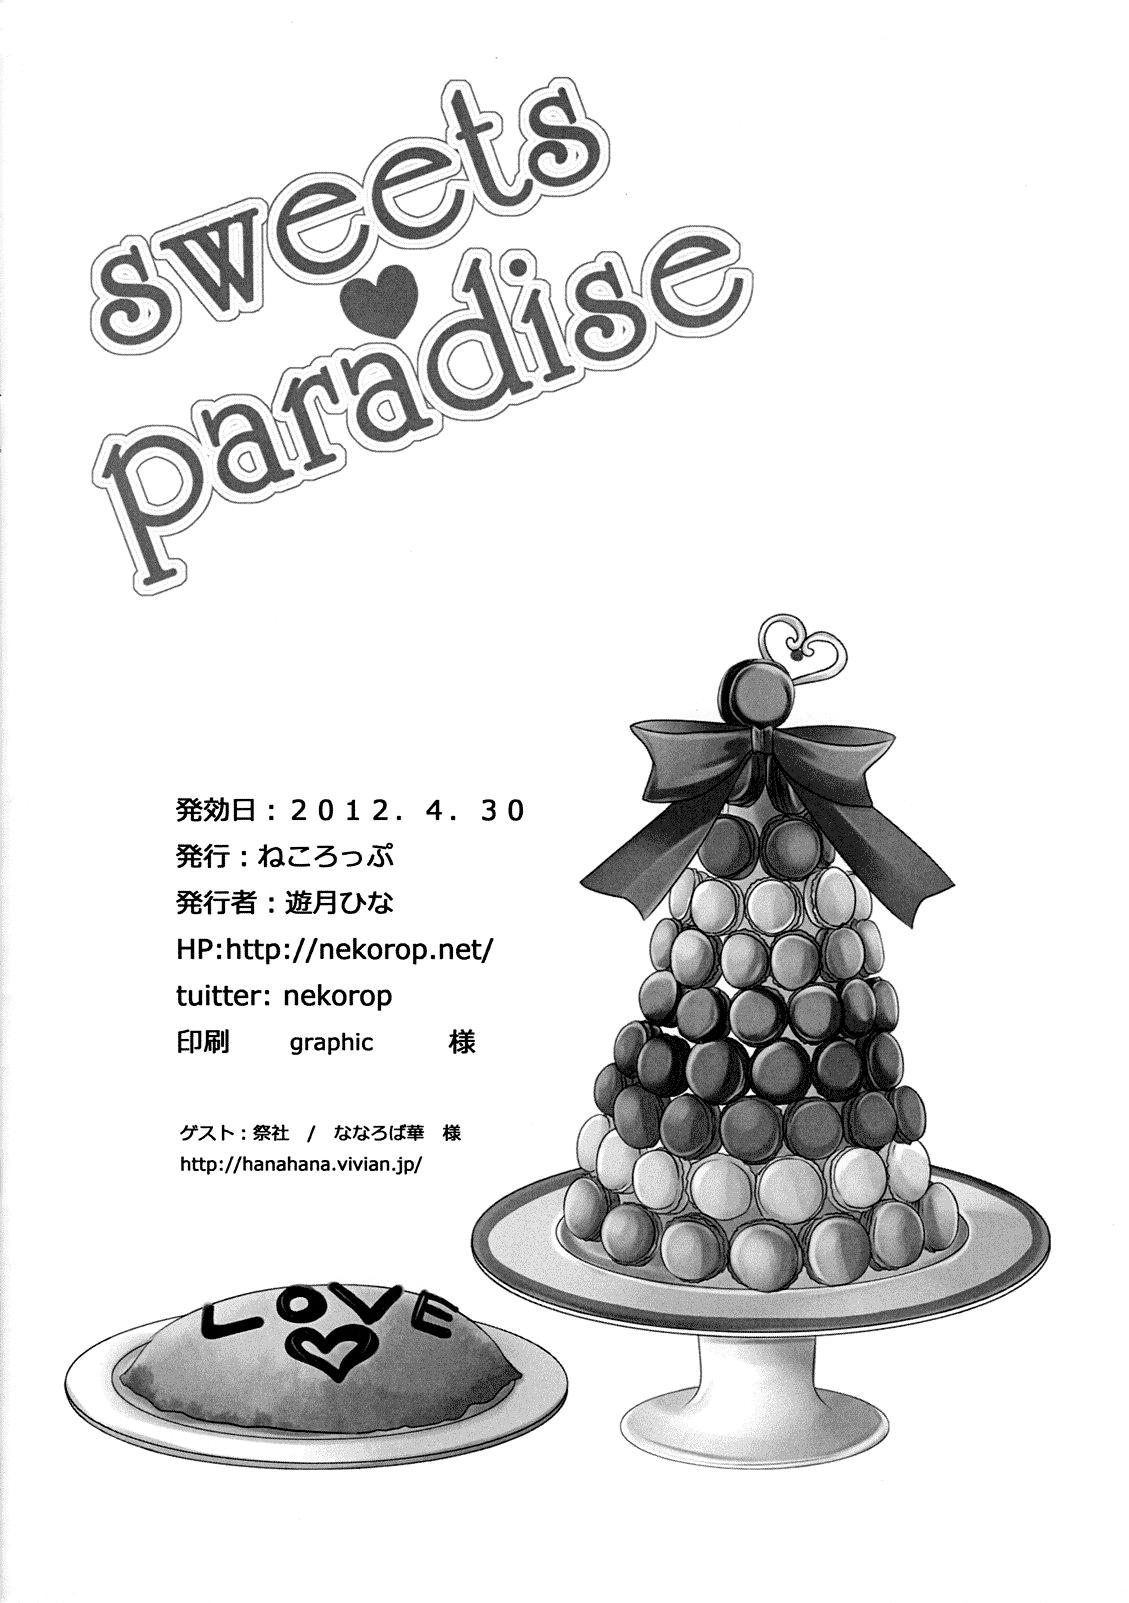 Sweets Paradise 12